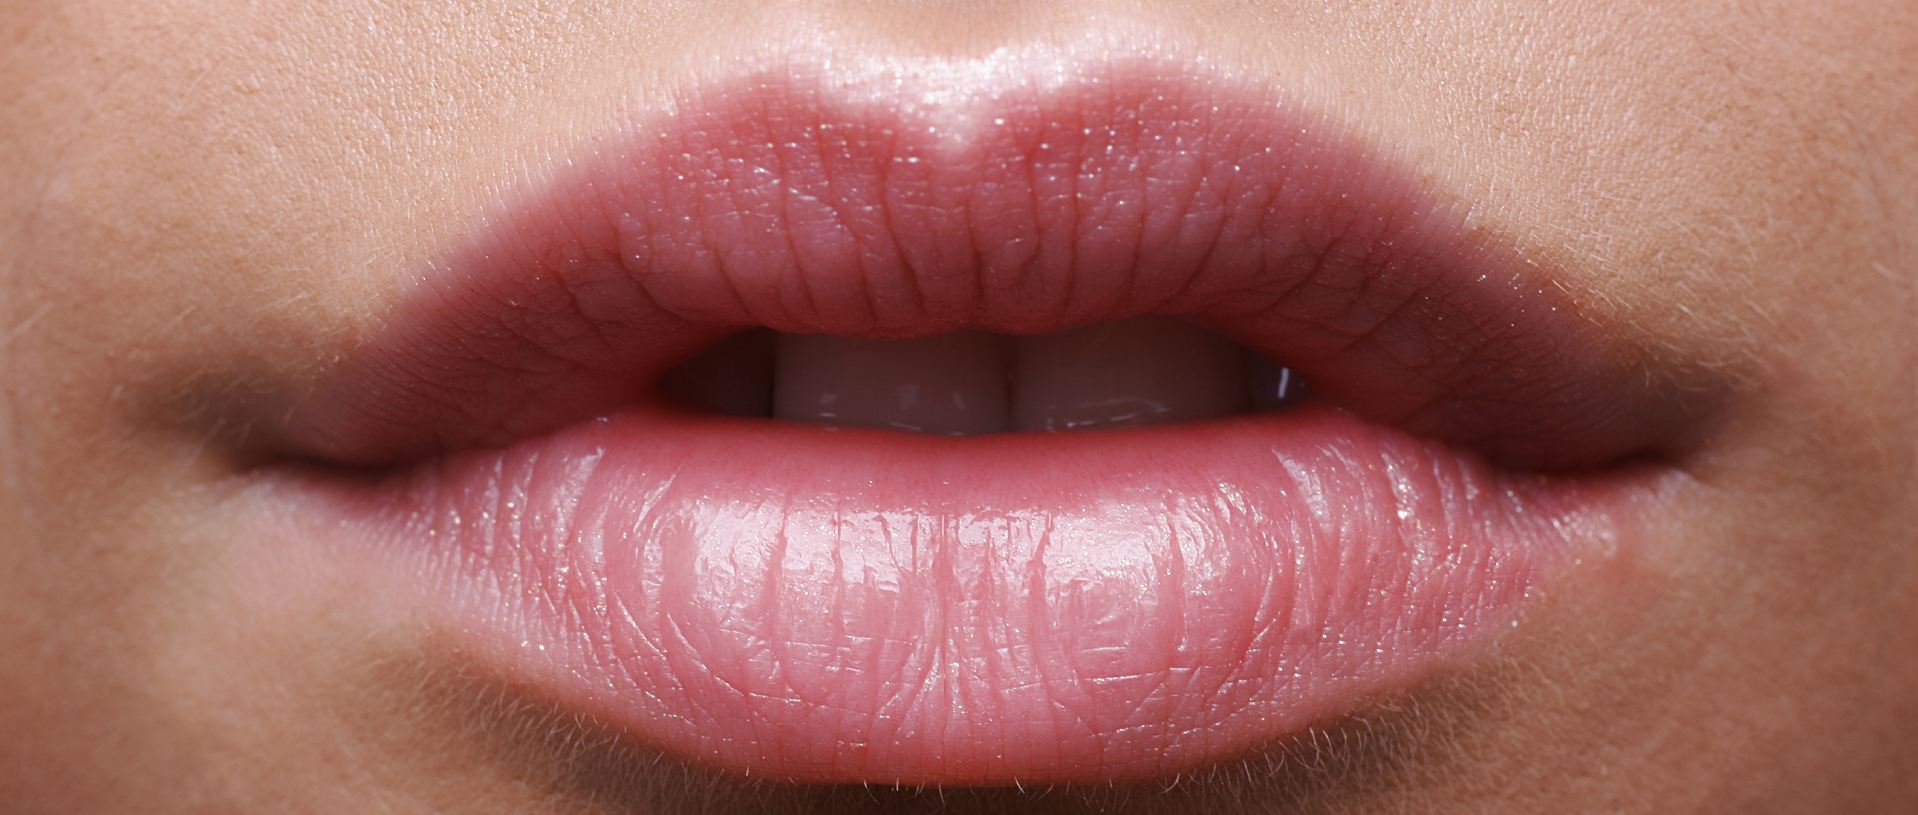 lip reduction